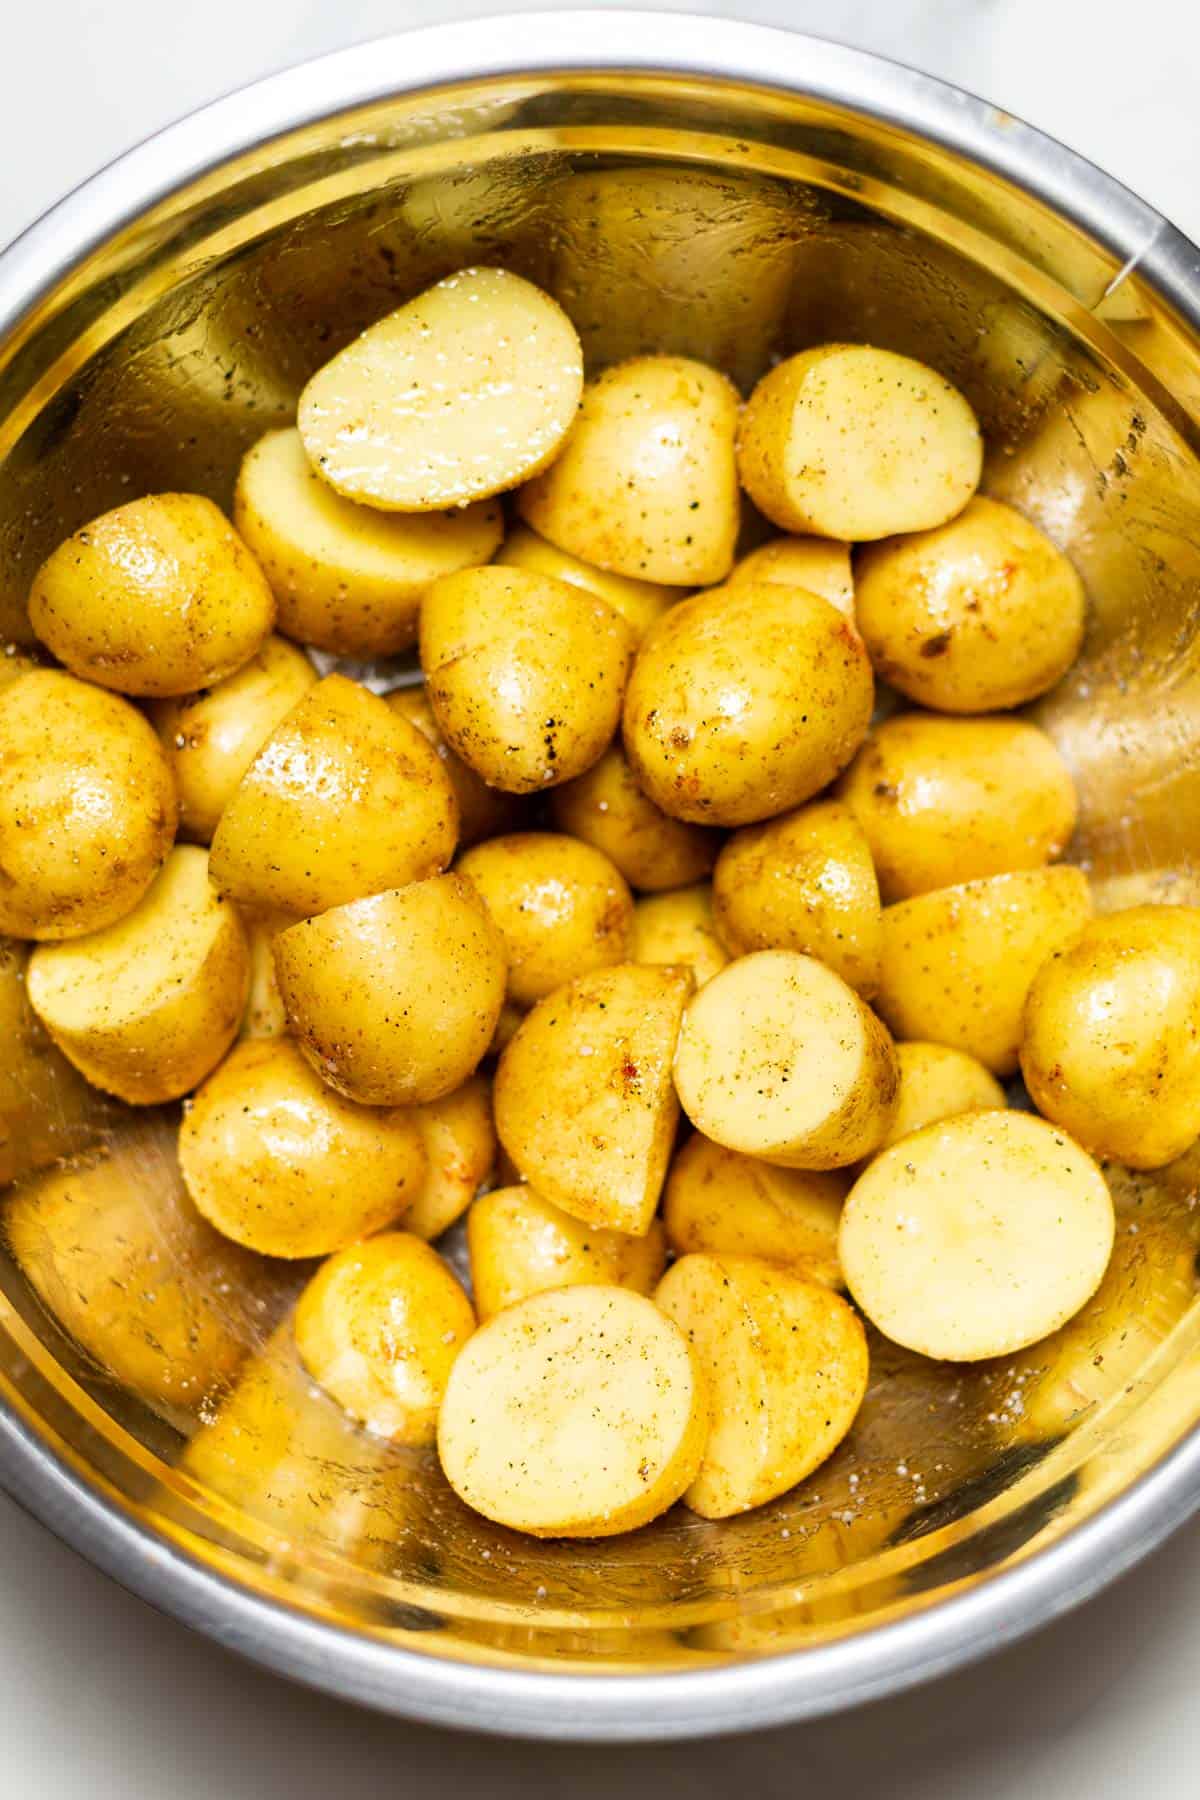 yukon gold baby potatoes sliced in half and seasoned